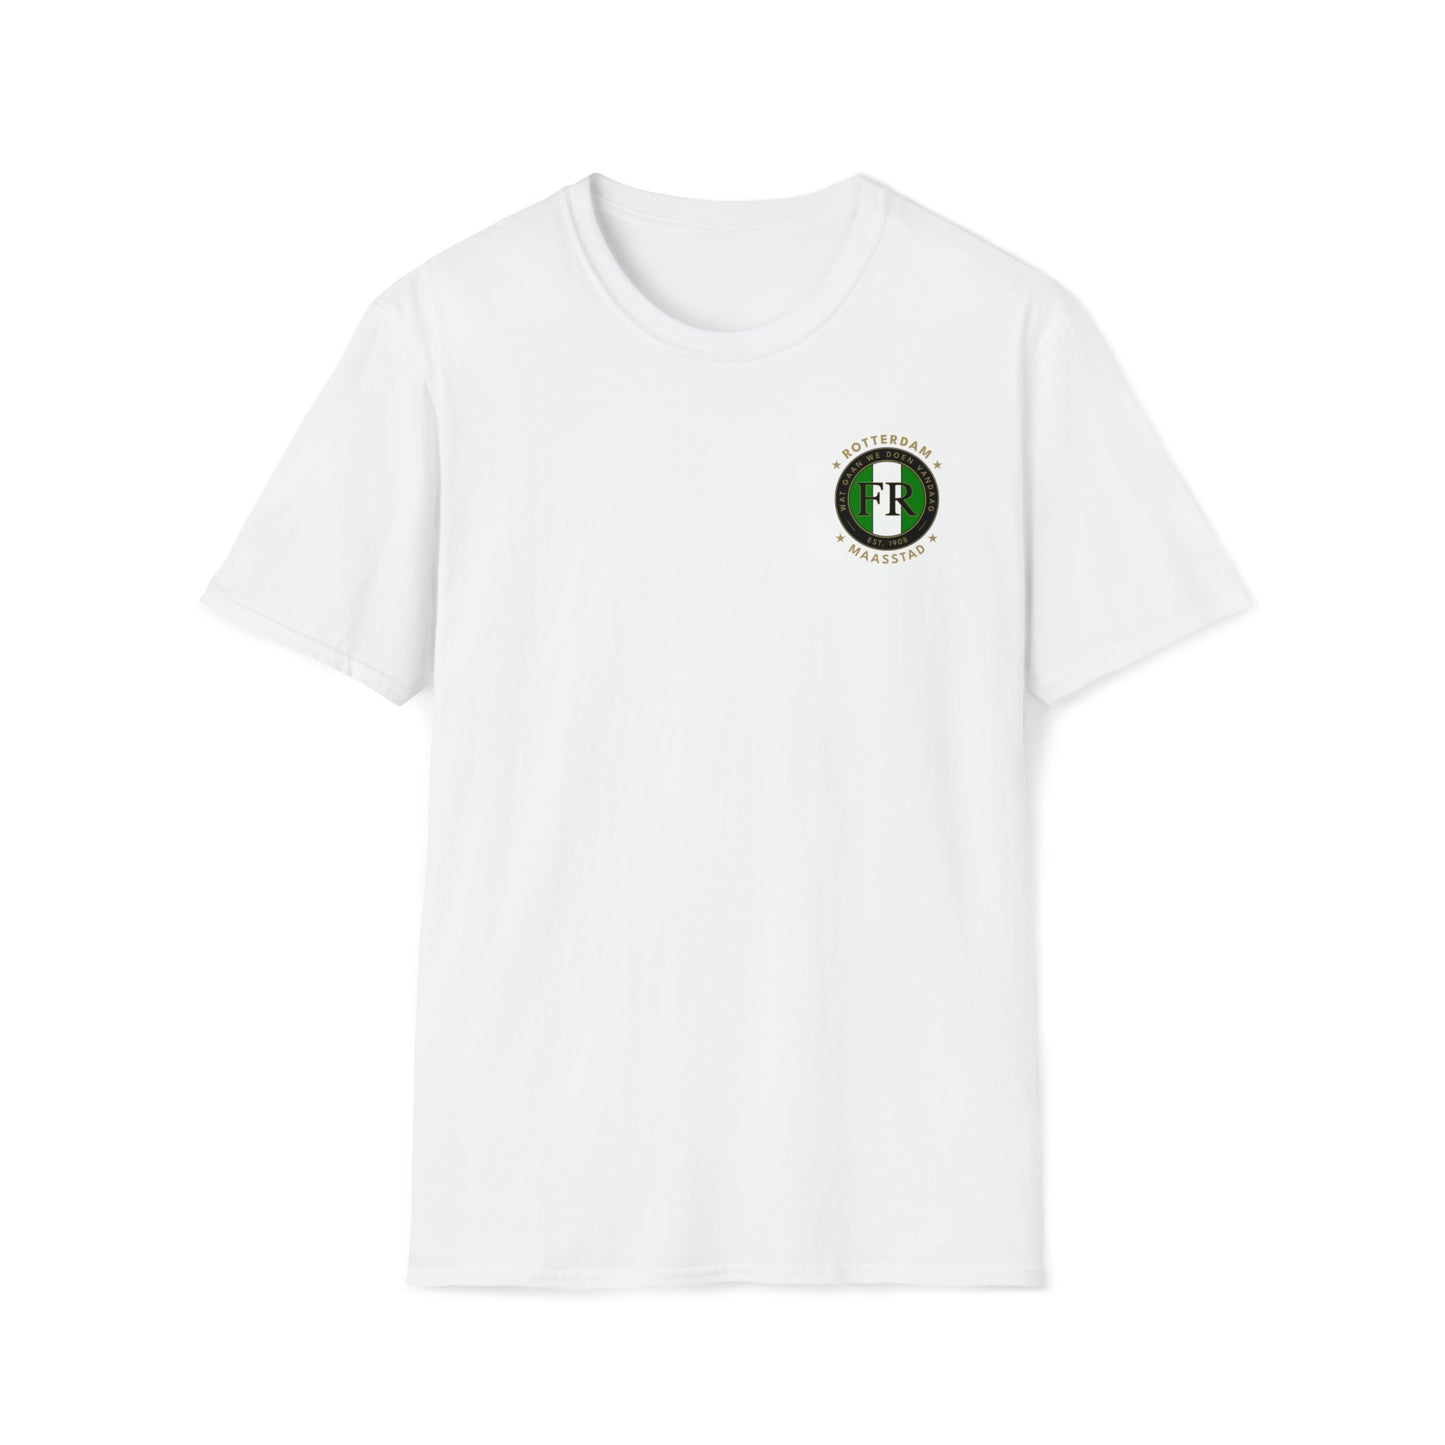 T-shirt regular - FR - Wat gaan we doen vandaag - logo links